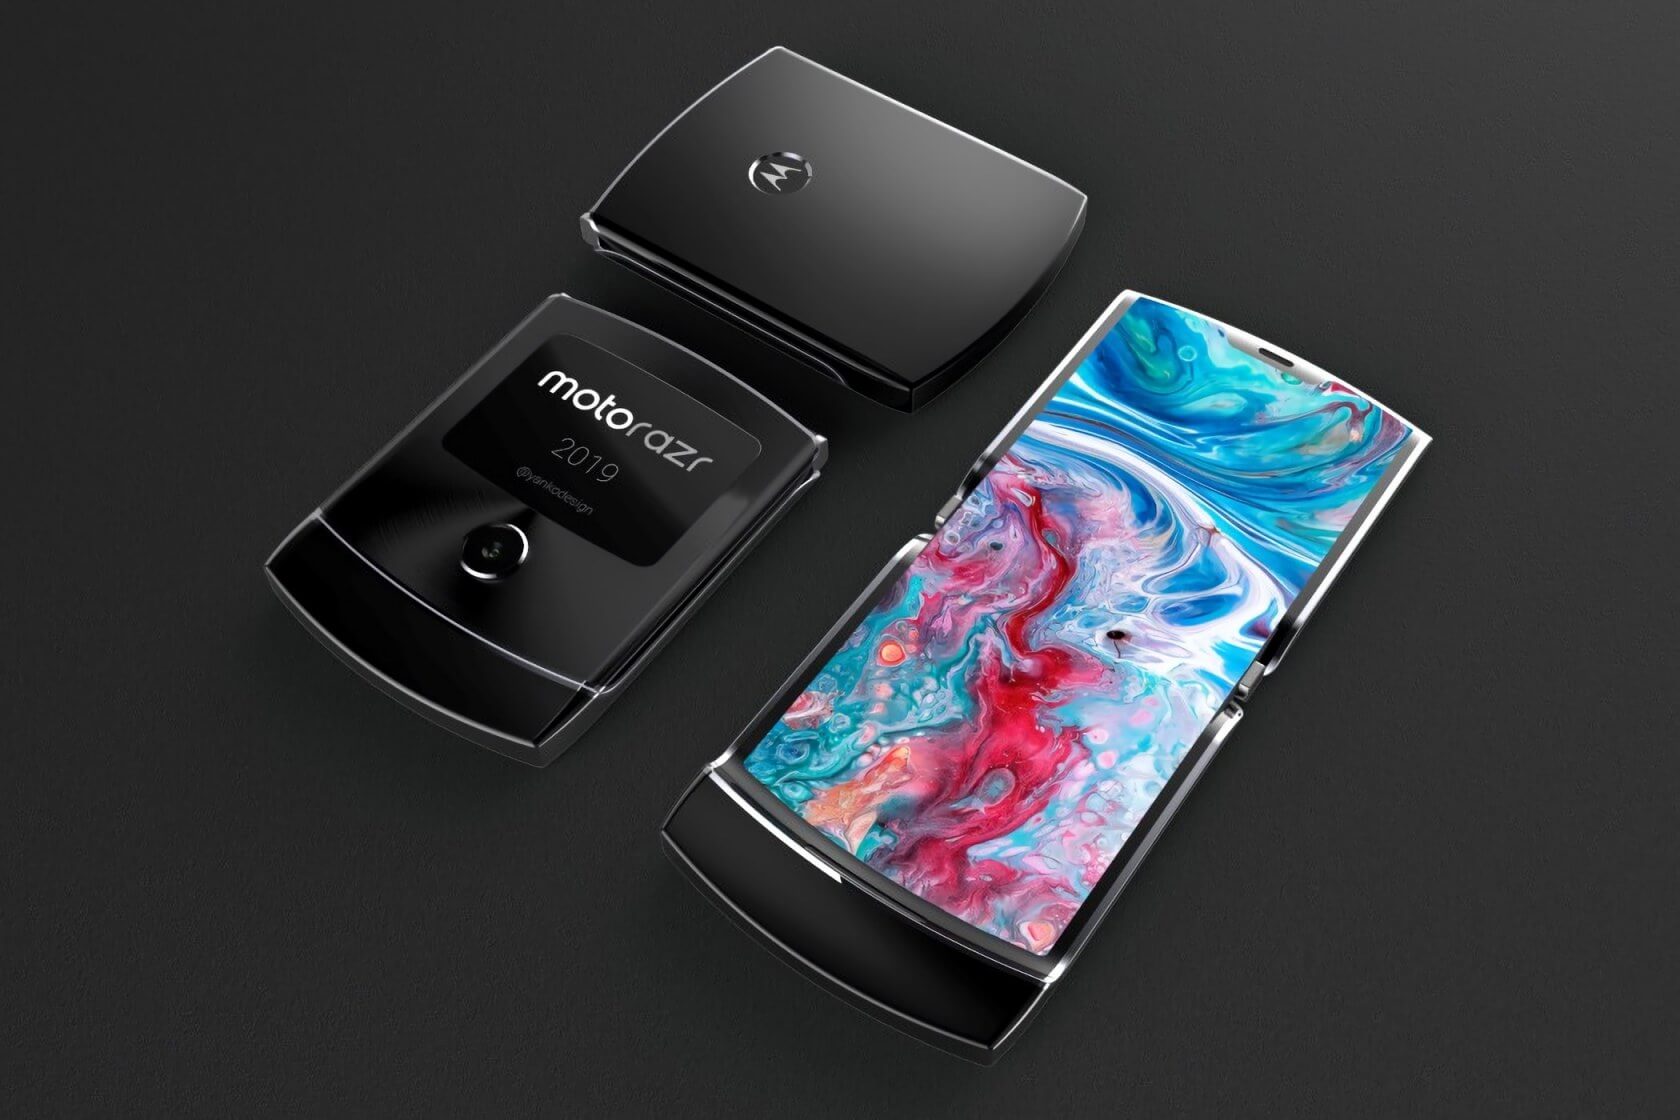 Motorola VP says the company's folding smartphone is on the way